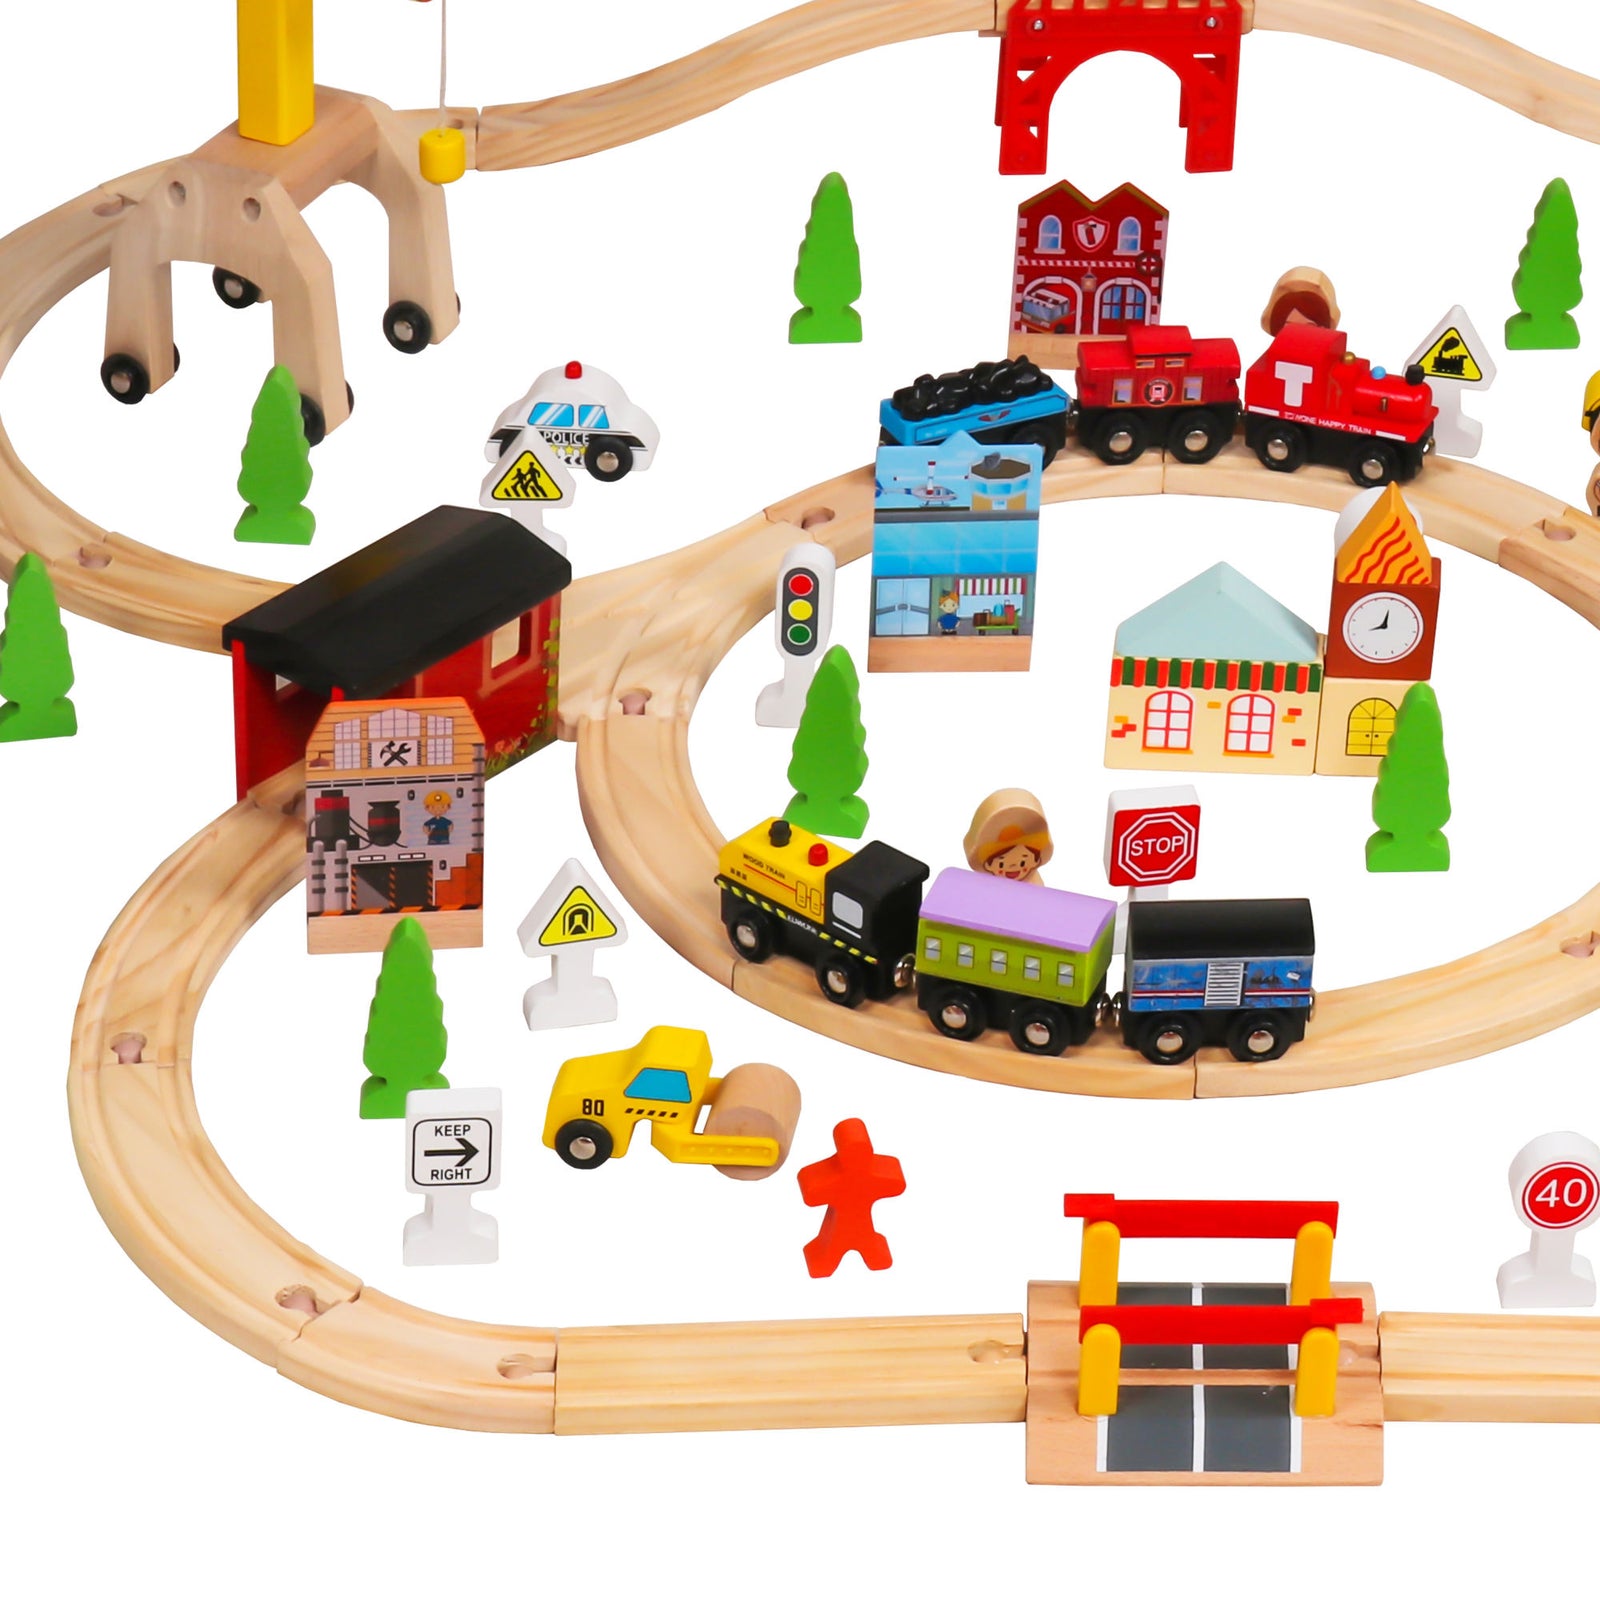 100pcs Wooden Train Set Learning Toy Kids Children Rail Lifter Fun Road Crossing Track Railway Play Multicolor YF